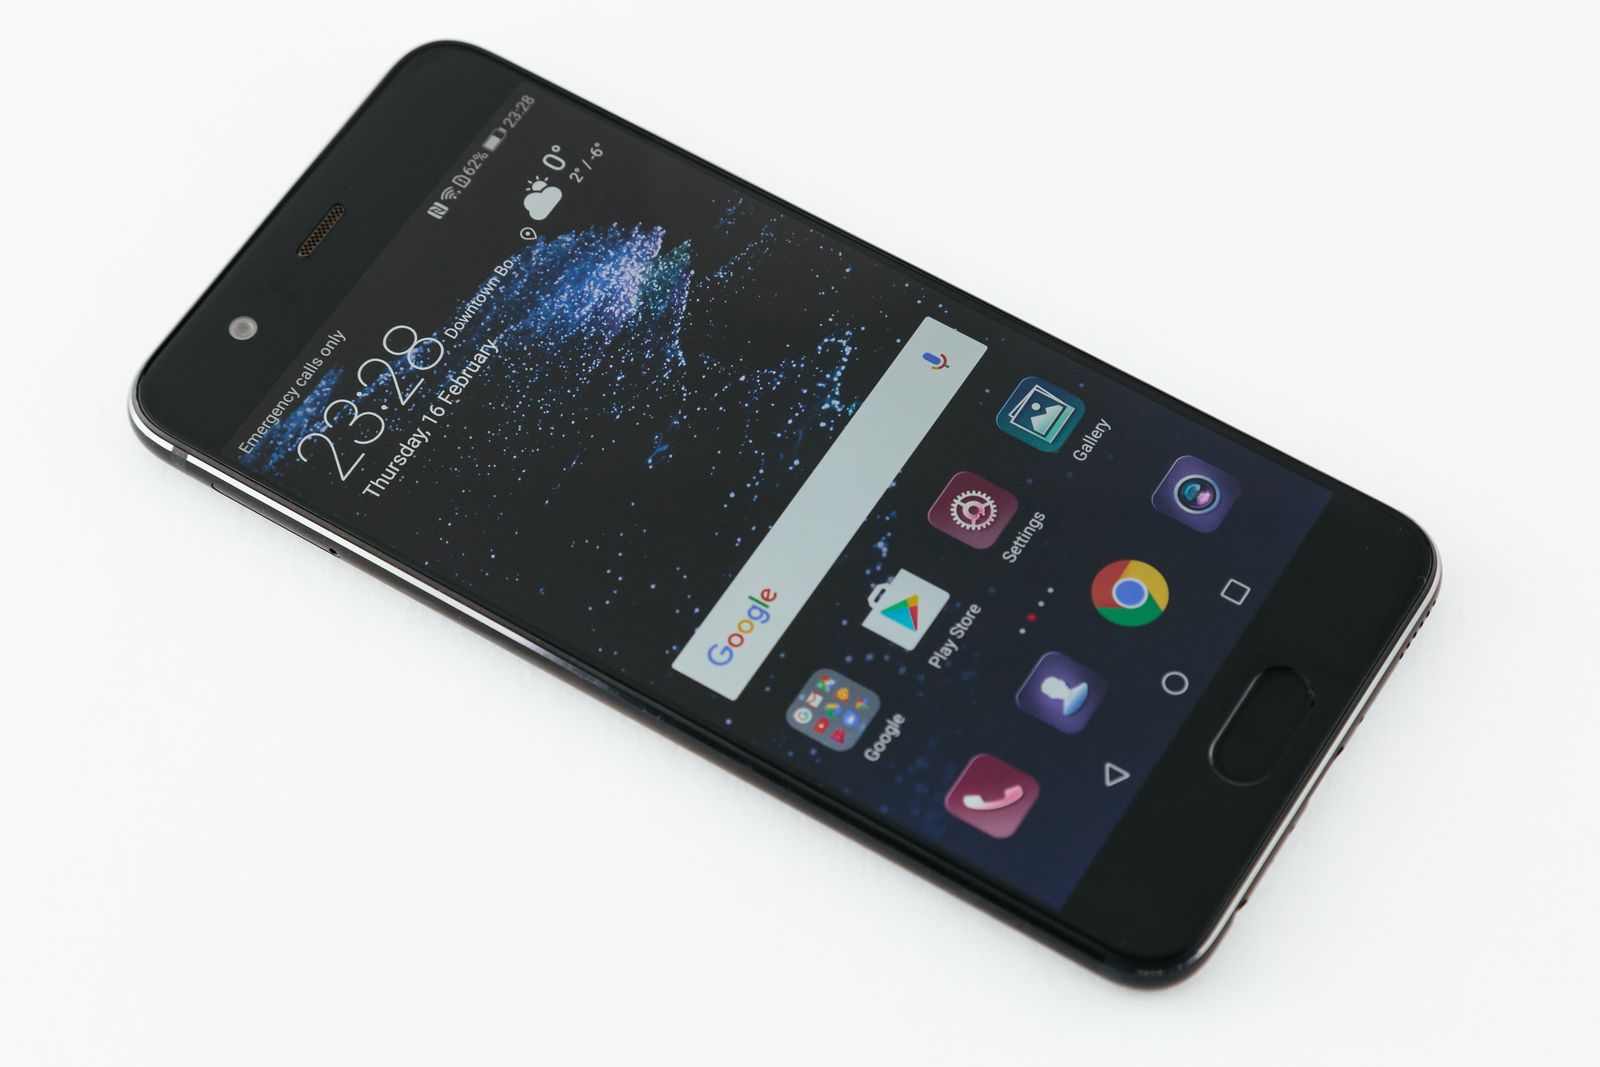 Huawei P10 smartphone